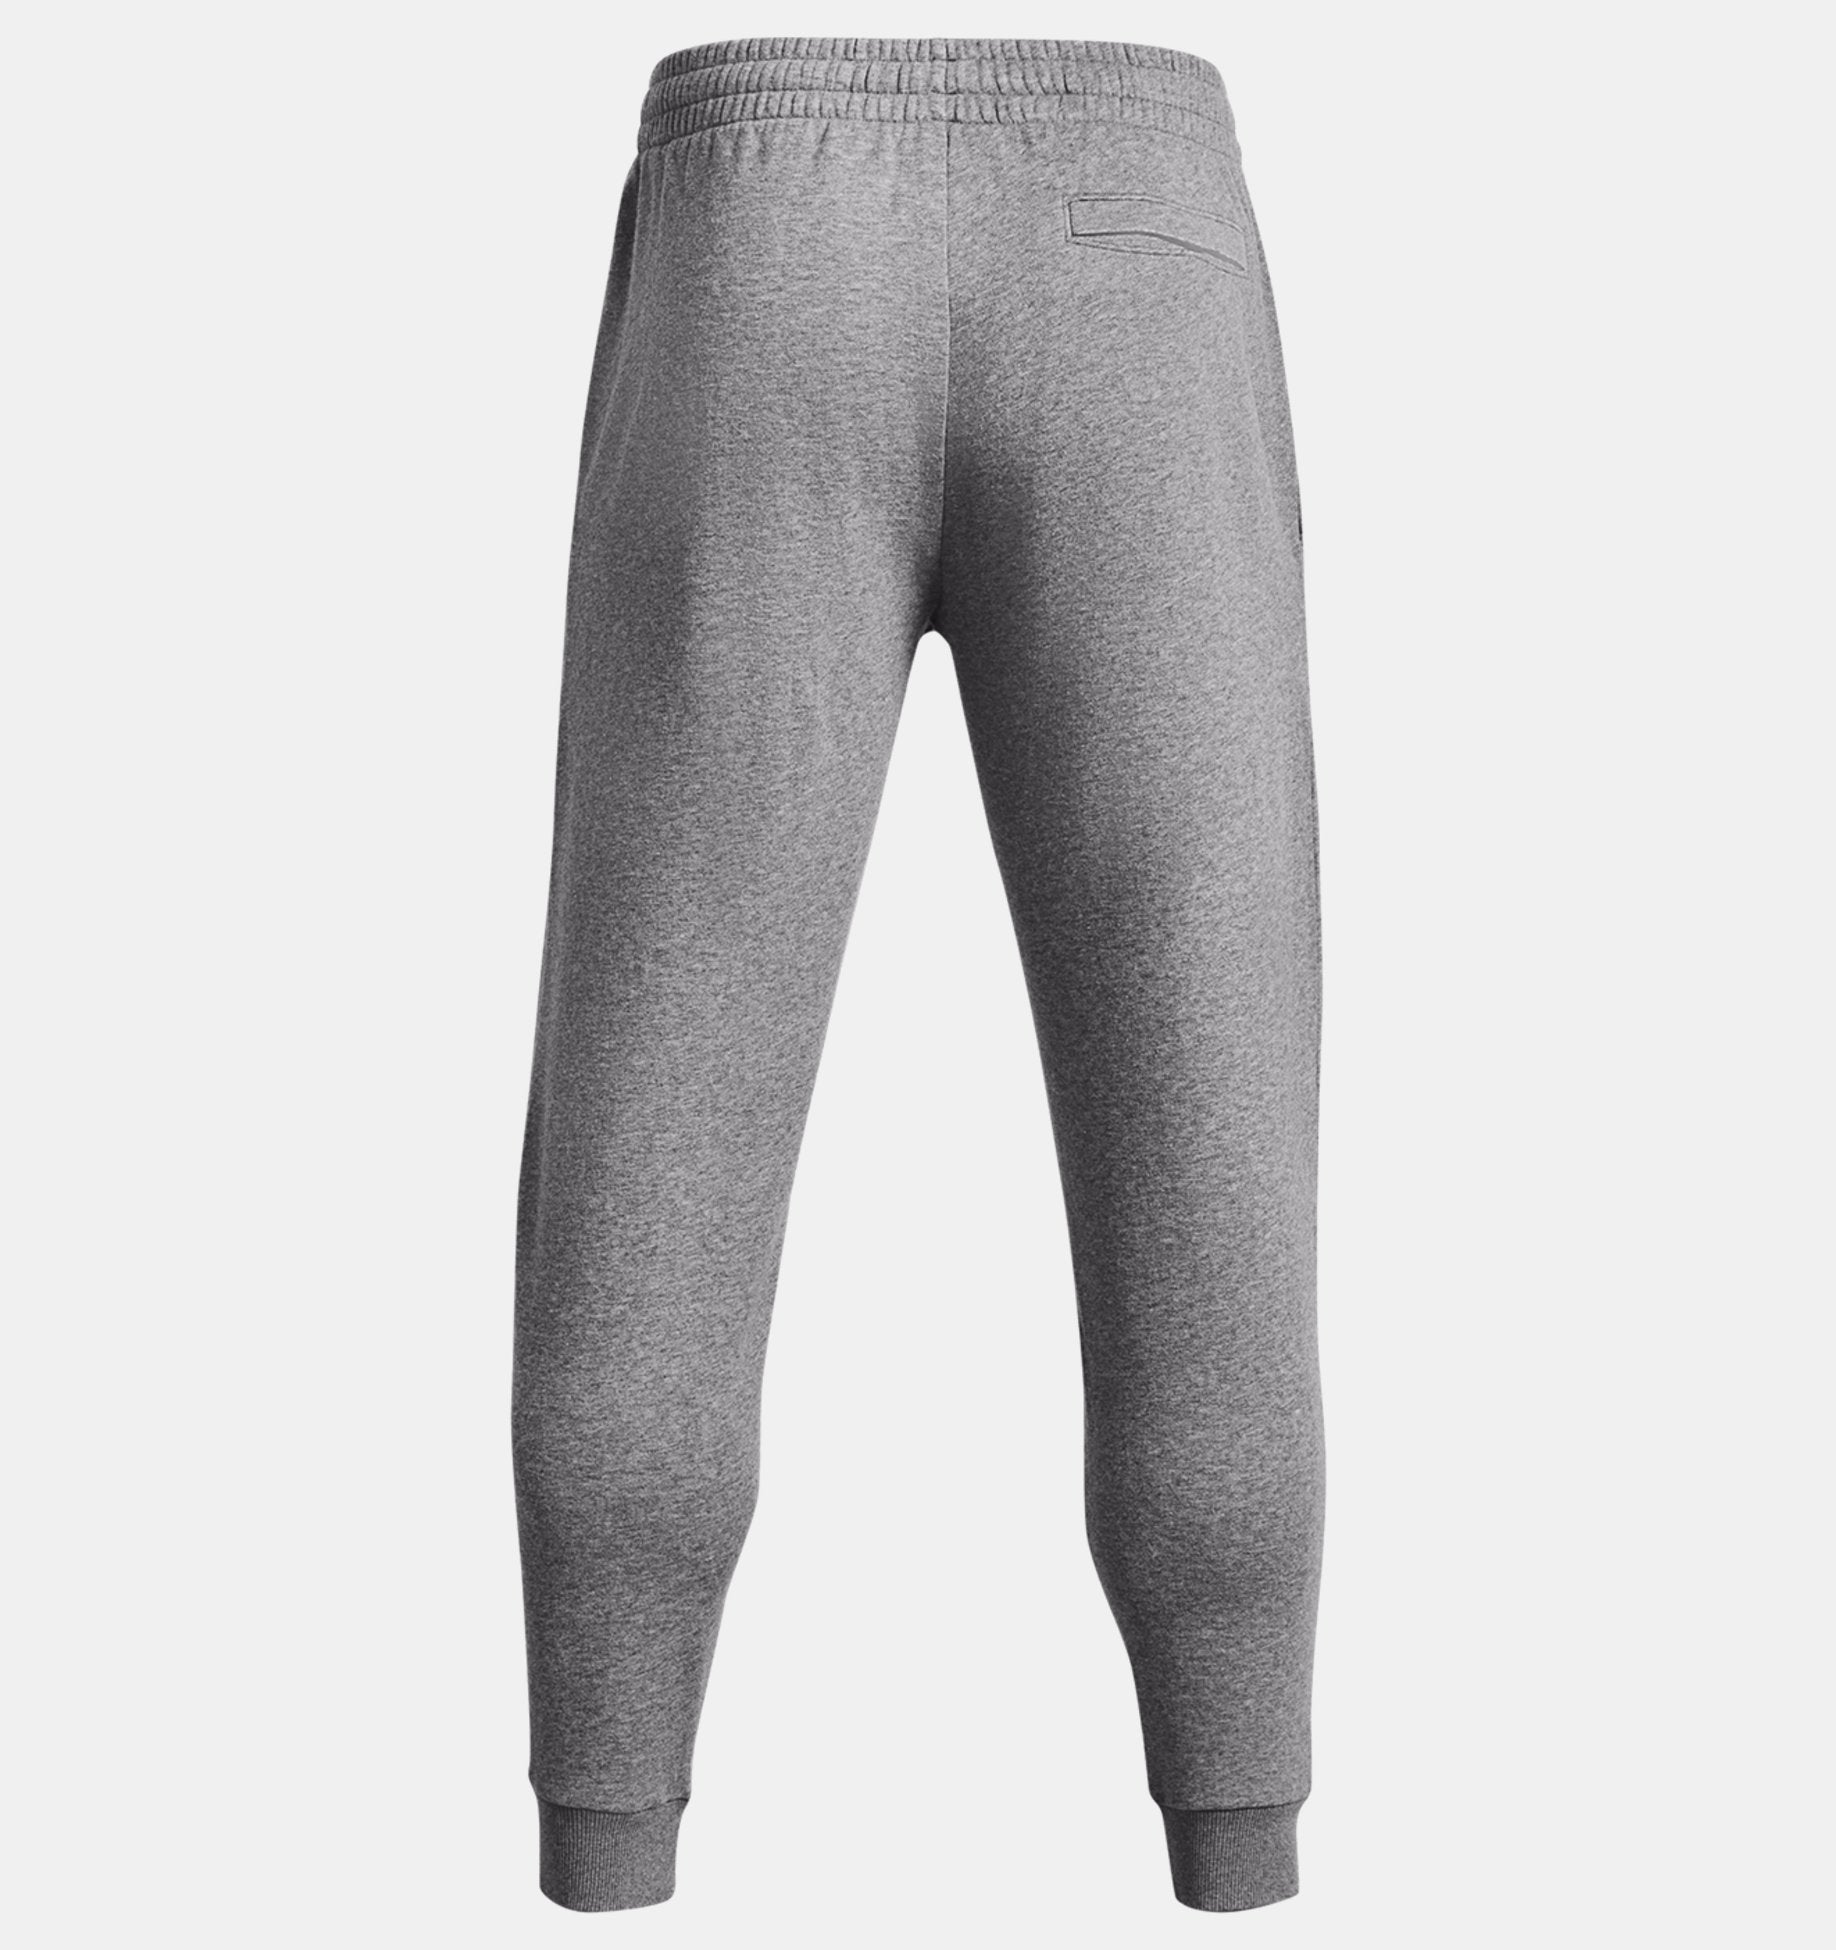 Pantalon de Jogging en Molleton UA Rival Pour Hommes - Grey-025